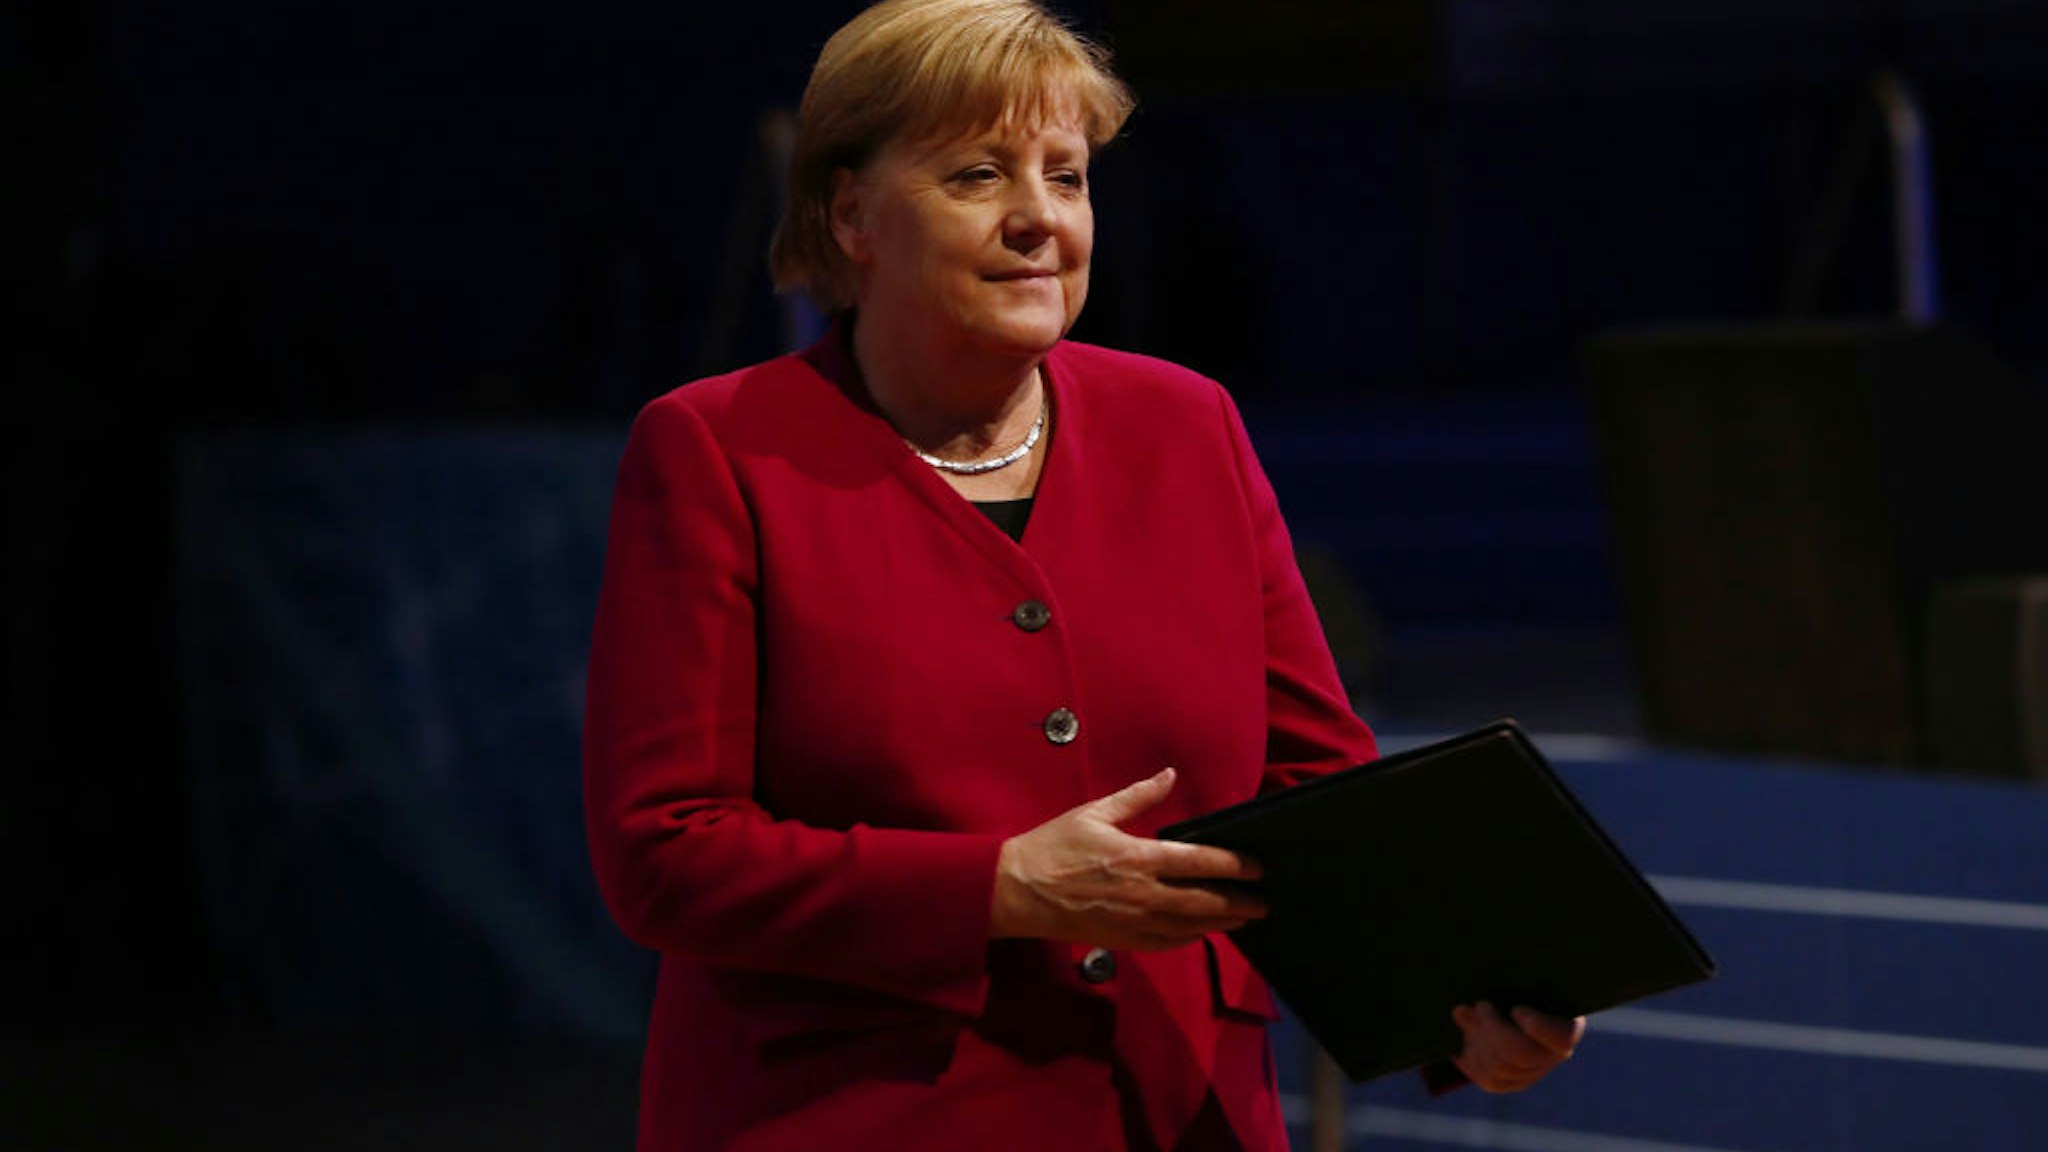 German Chancellor Angela Merkel arrives to speak at the opening of the Internet Governance Forum on November 26, 2019 in Berlin, Germany.